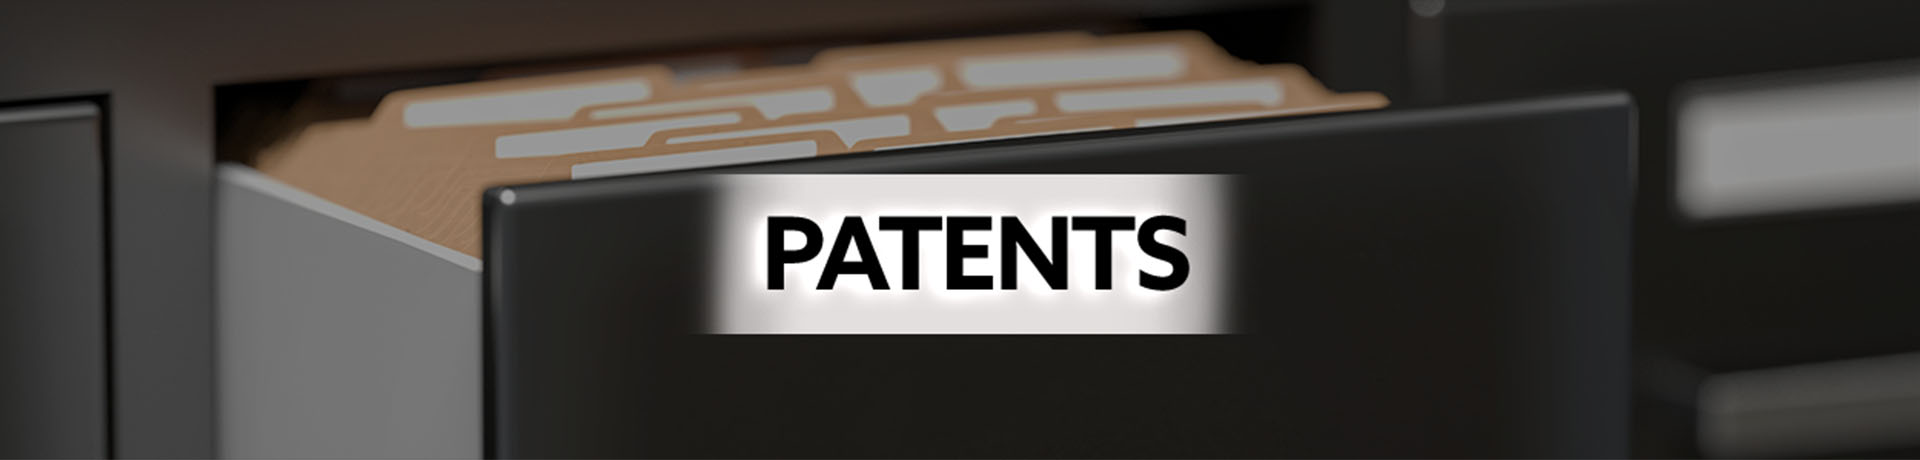 VOXX Patents